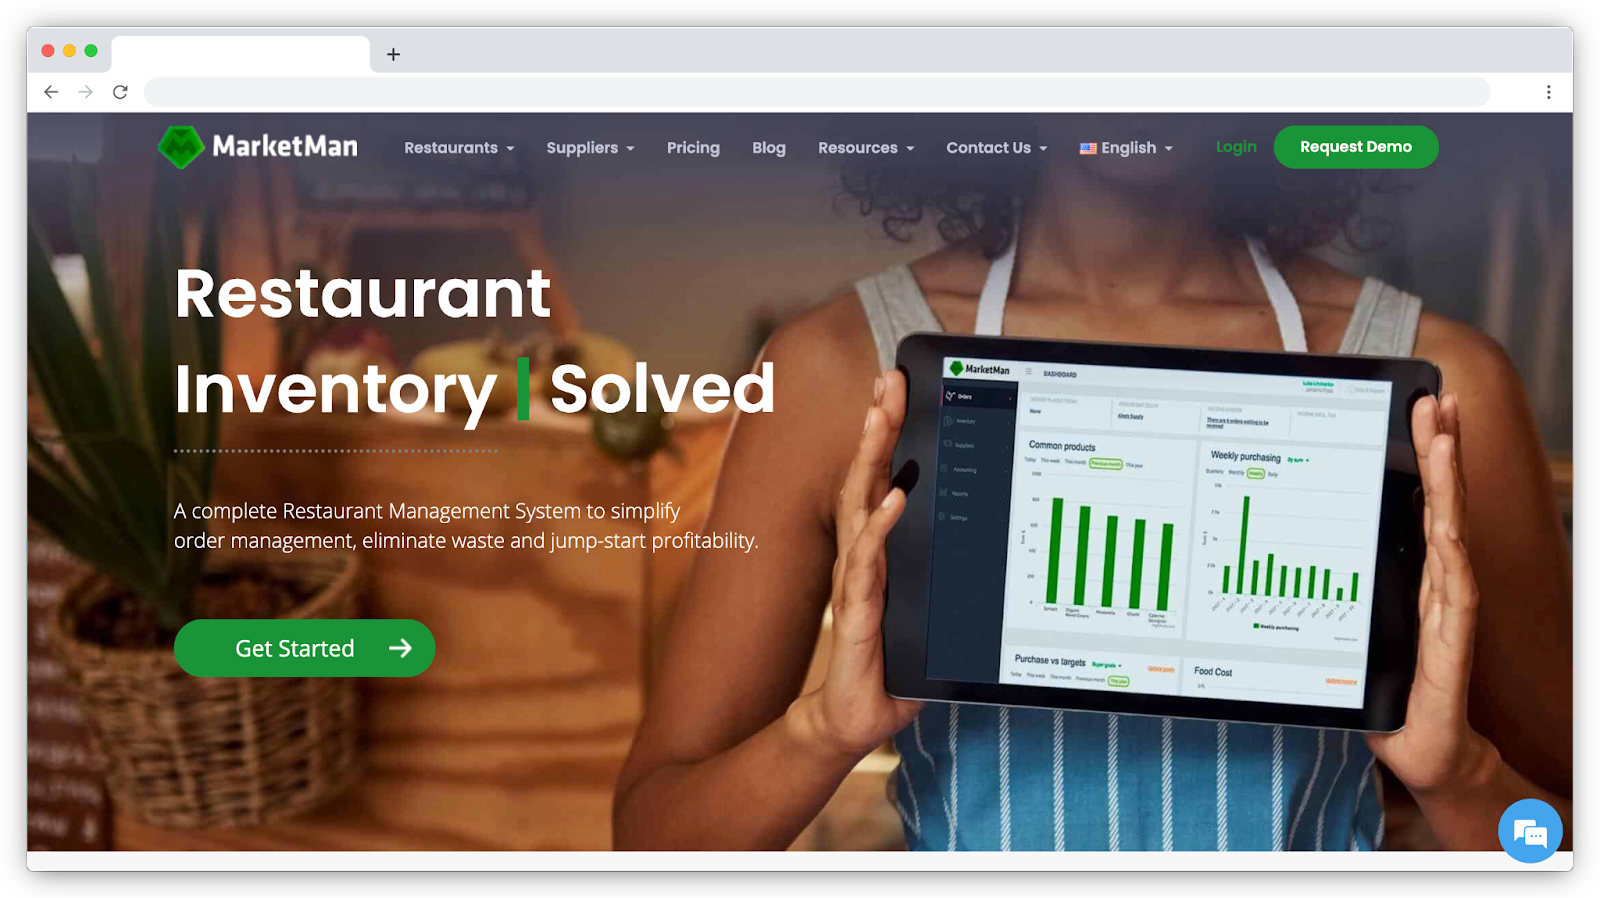 Marketman inventory management software for restaurants